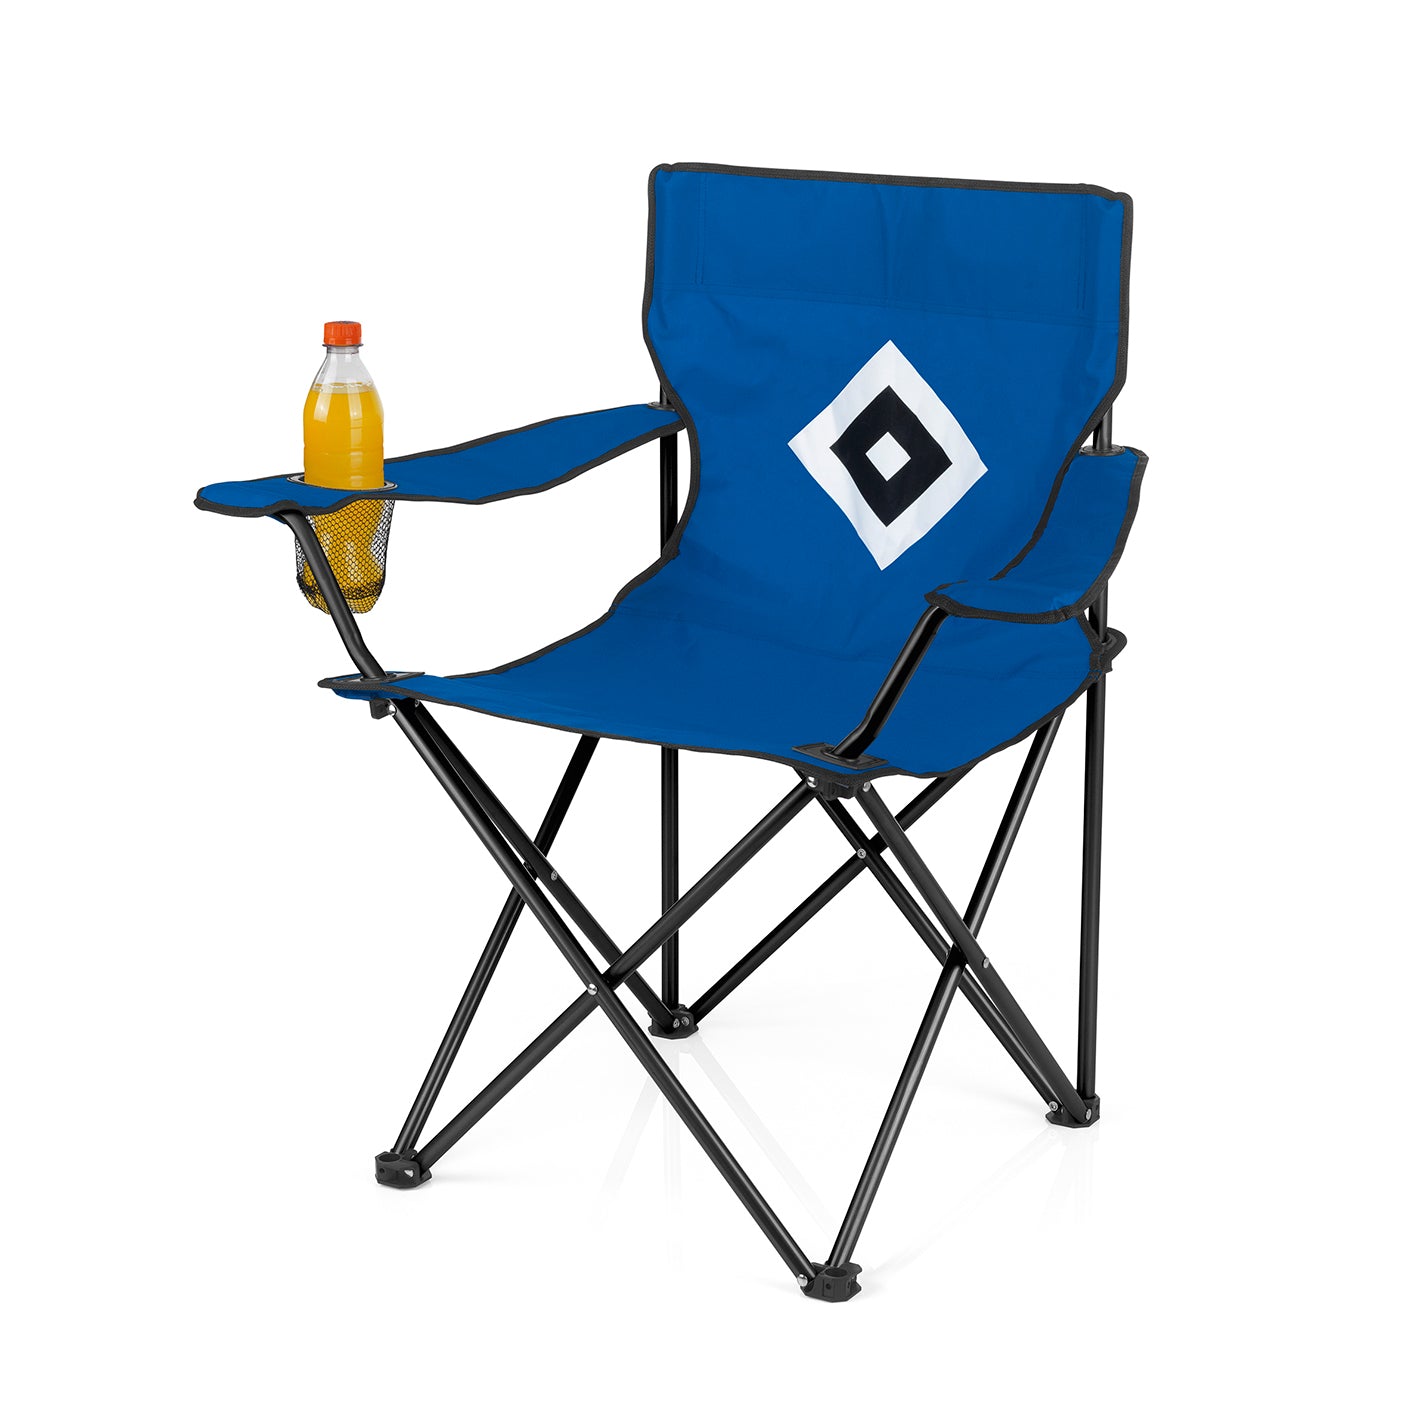 Campingstuhl faltbar mit Logo - 80x50 cm - blau von HSV